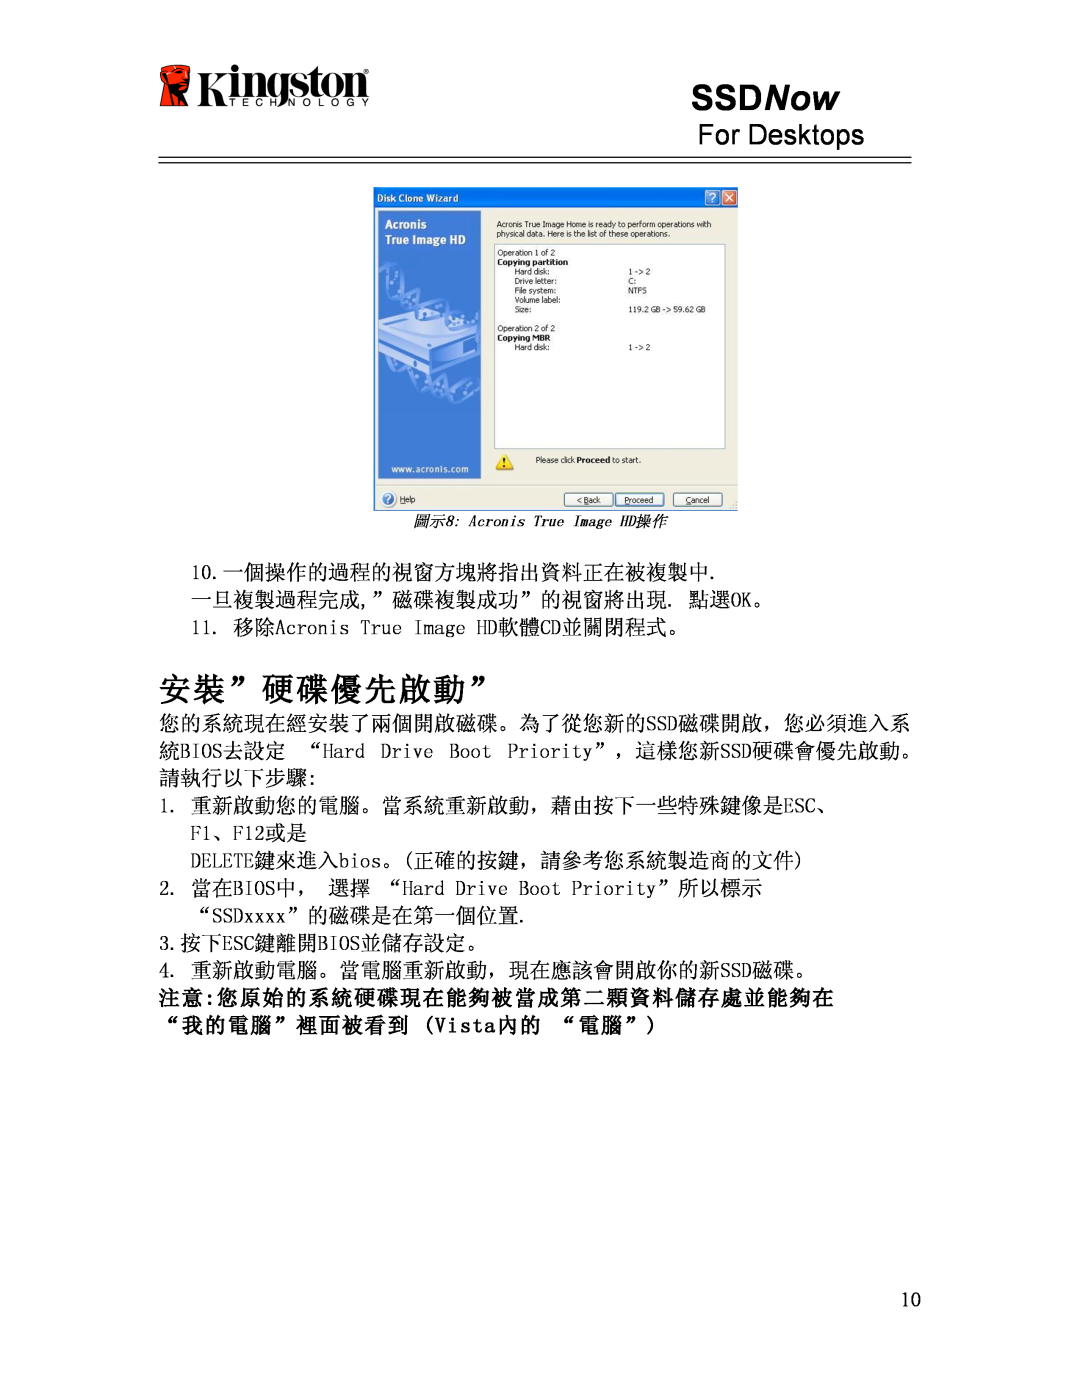 Kingston Technology 07-16-2009 manual 安裝”硬碟優先啟動”, SSDNow, For Desktops 